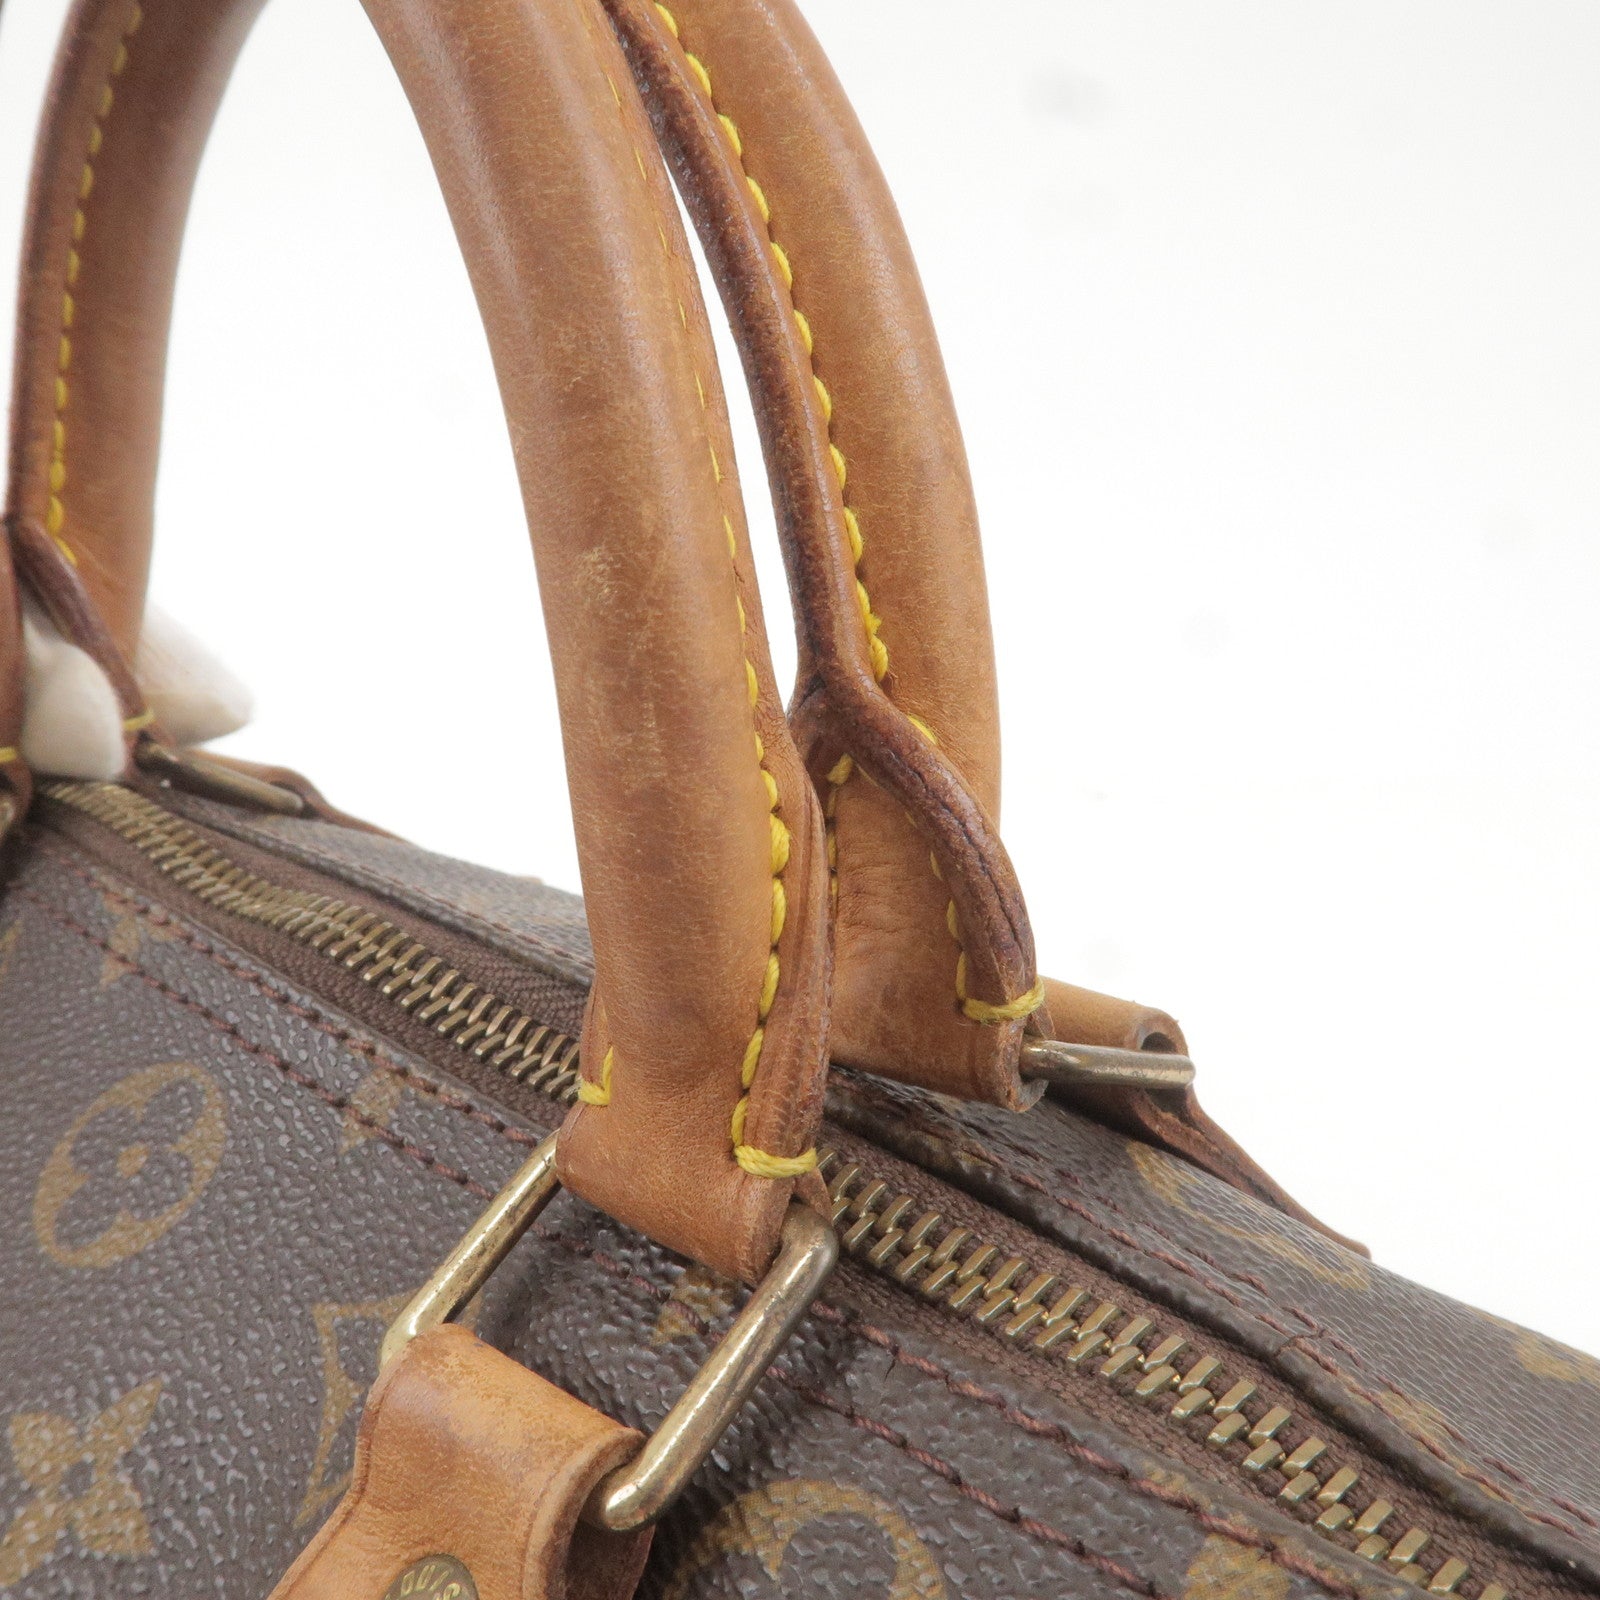 LOUIS VUITTON Louis Vuitton Monogram Speedy 30 Handbag Boston Bag M41526